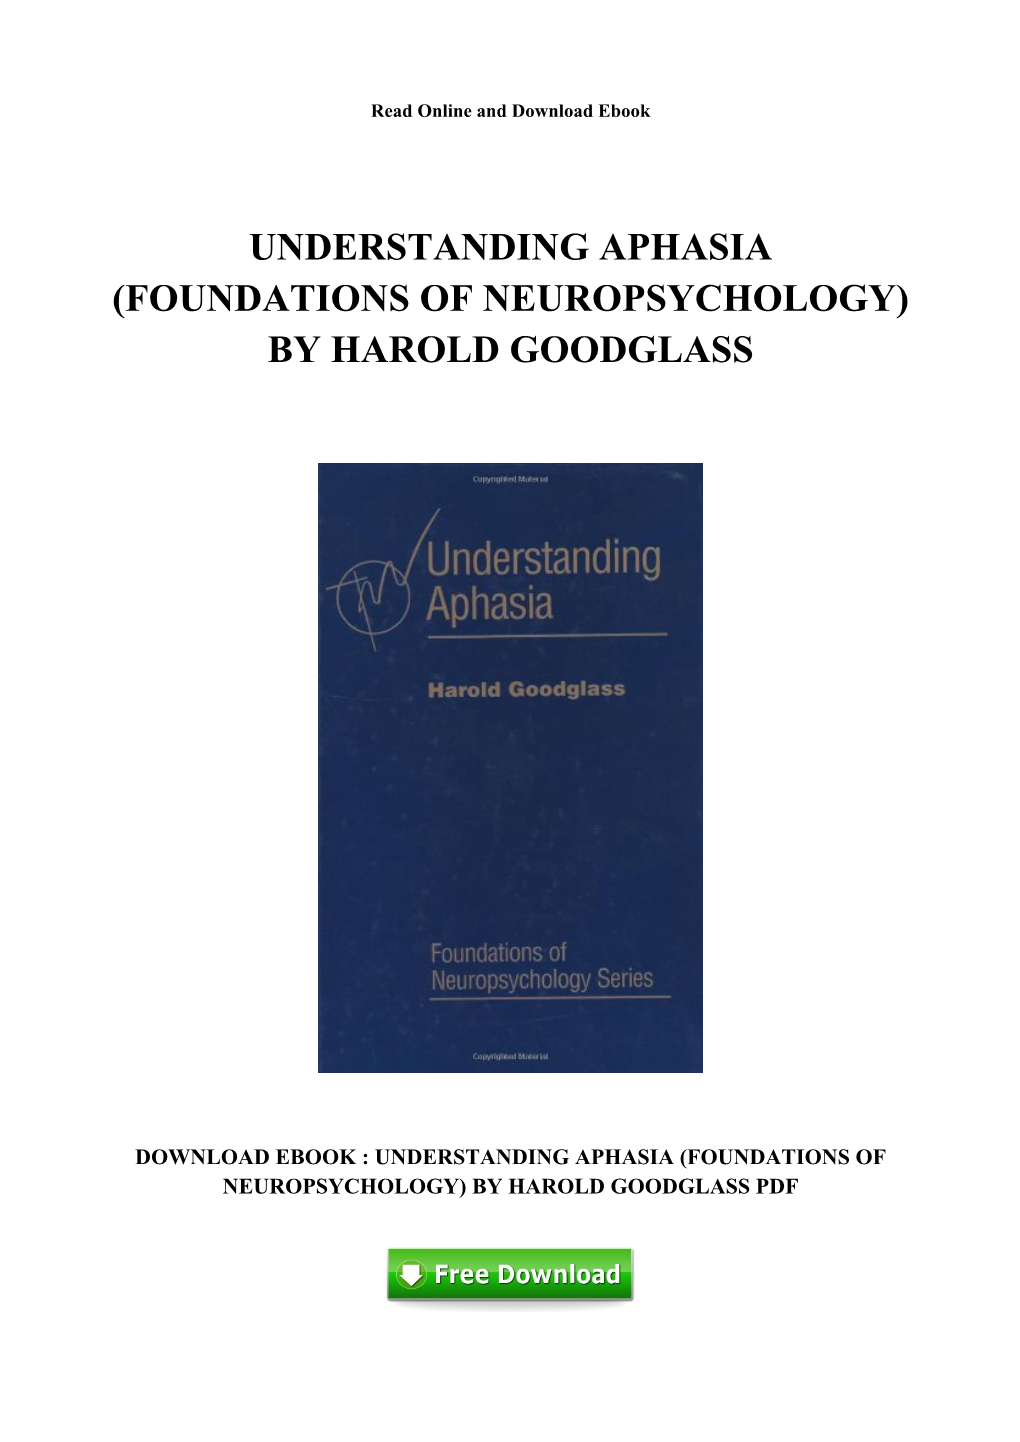 (Foundations of Neuropsychology) by Harold Goodglass